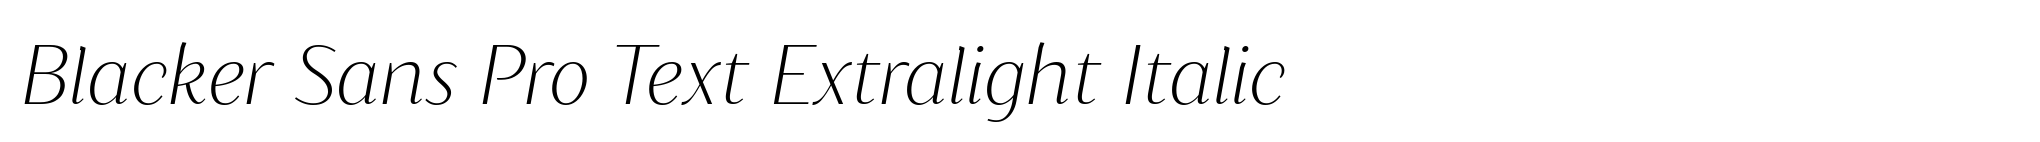 Blacker Sans Pro Text Extralight Italic image